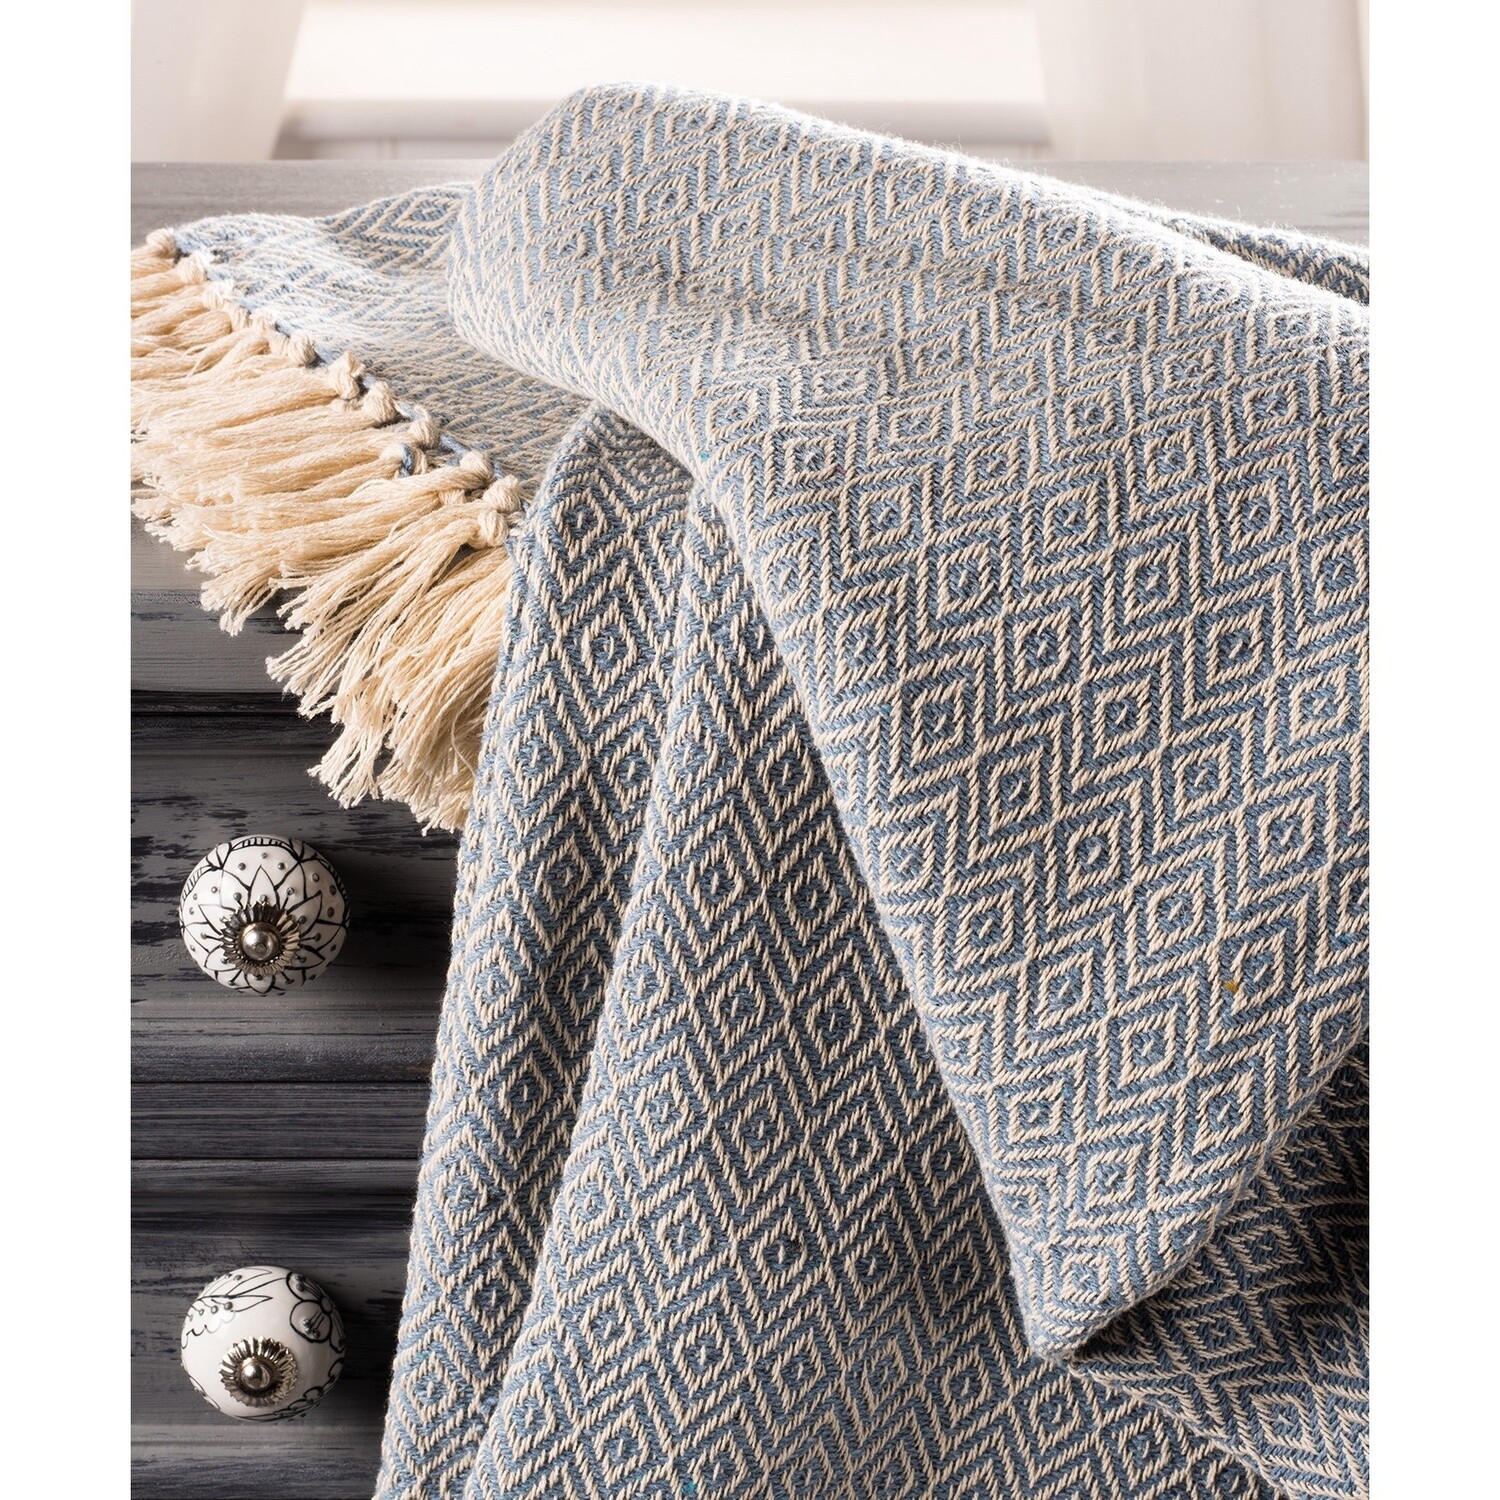 Handloom Arin Diamond Weave Cotton Throw - Grey/Blue - 125x150cm by Namaste